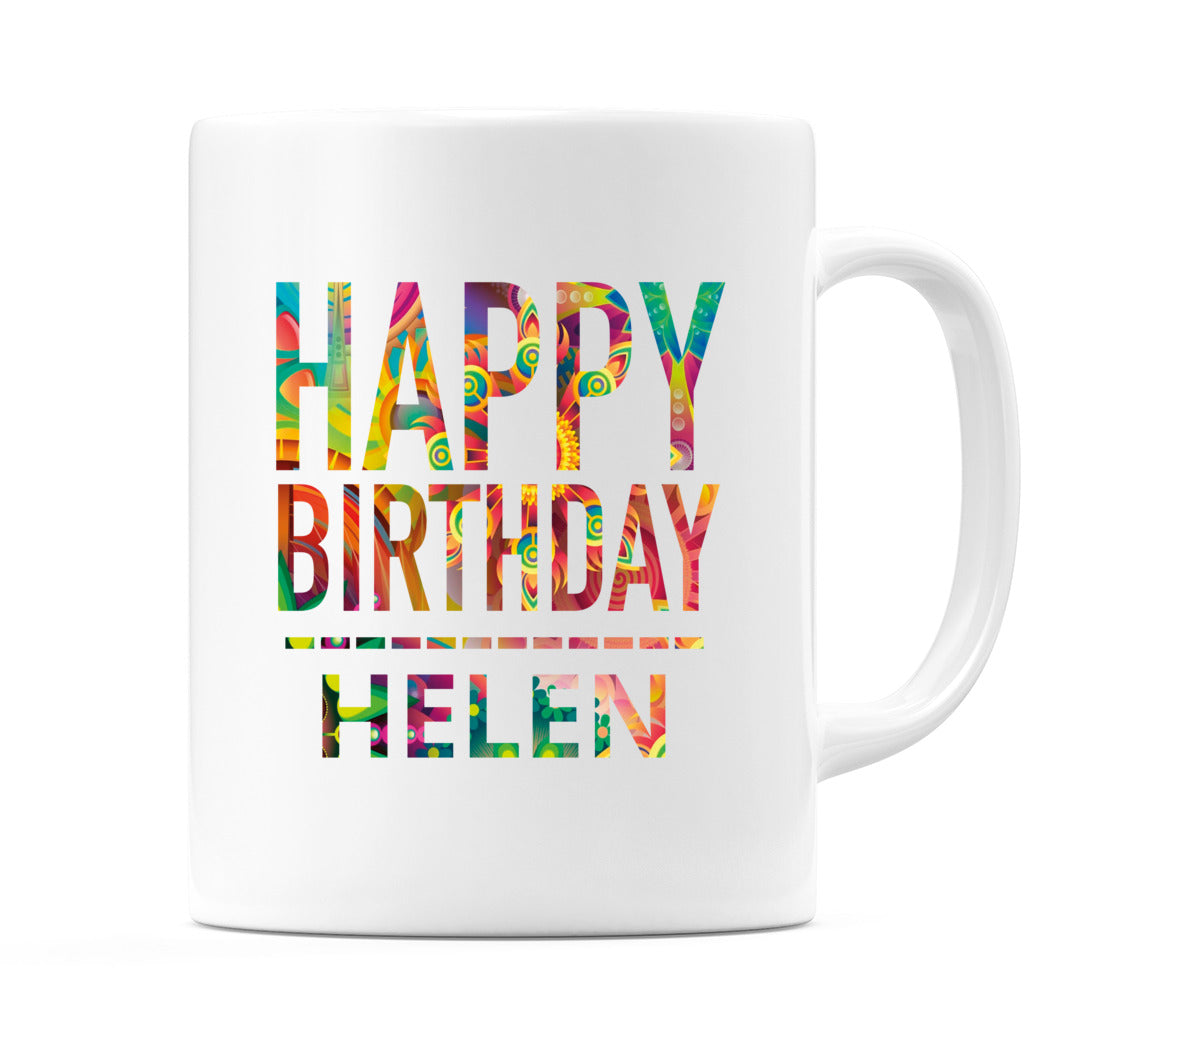 Happy Birthday Helen (Tie Dye Effect) Mug Cup by WeDoMugs